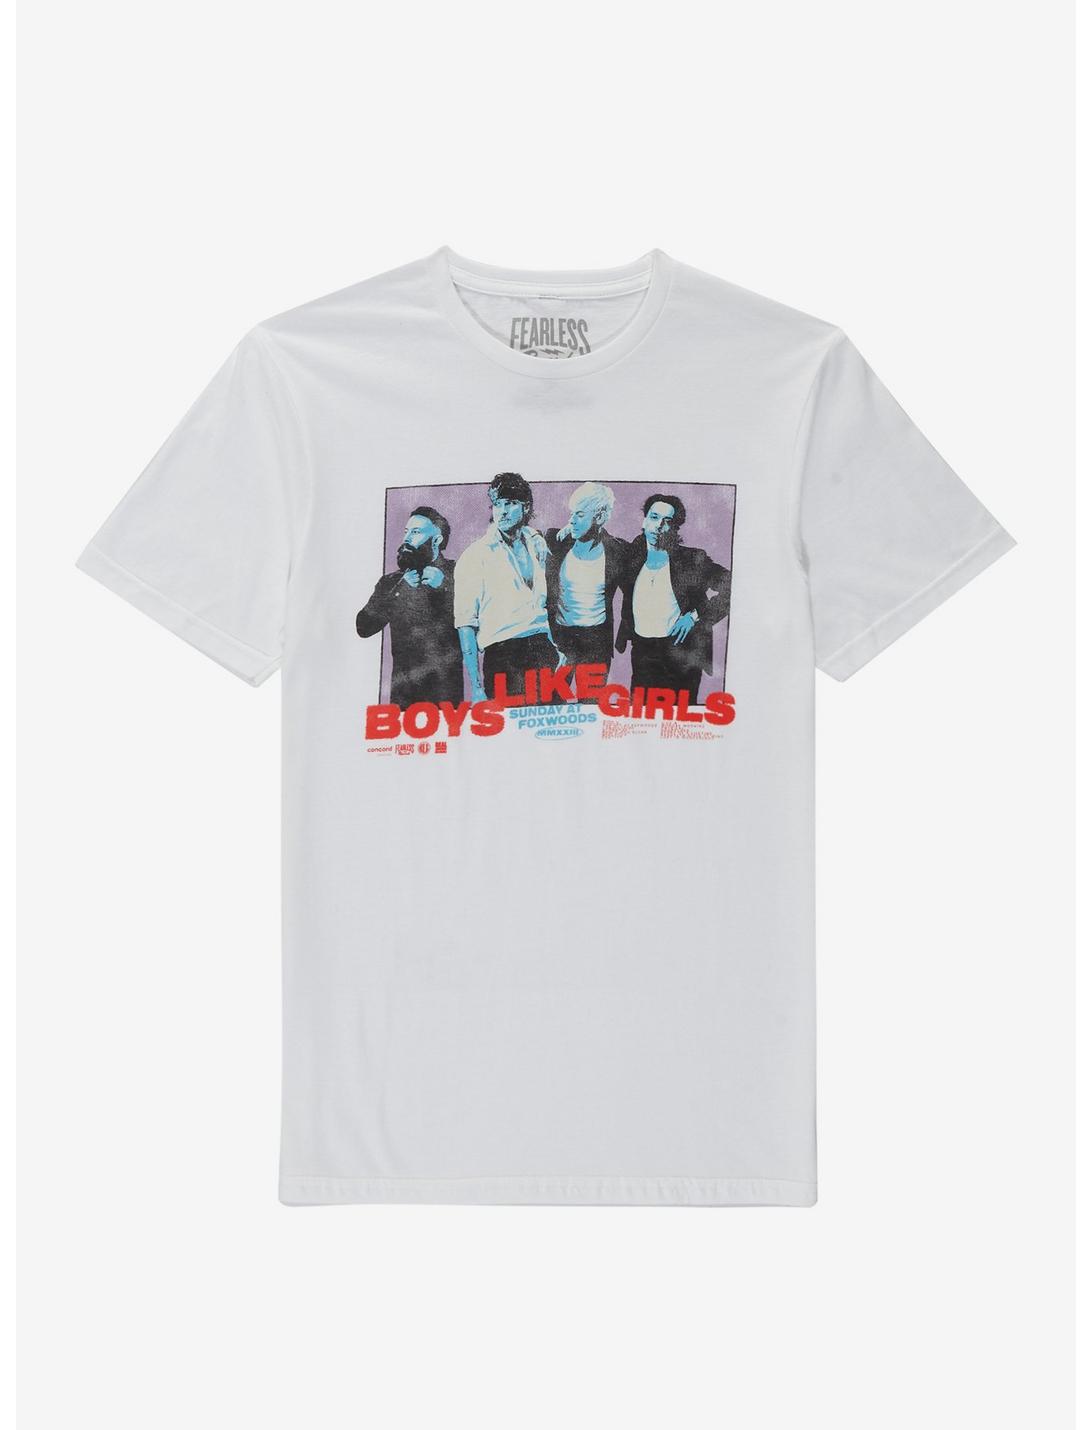 Boys Like Girls Group Boyfriend Fit Girls T-Shirt, BRIGHT WHITE, hi-res